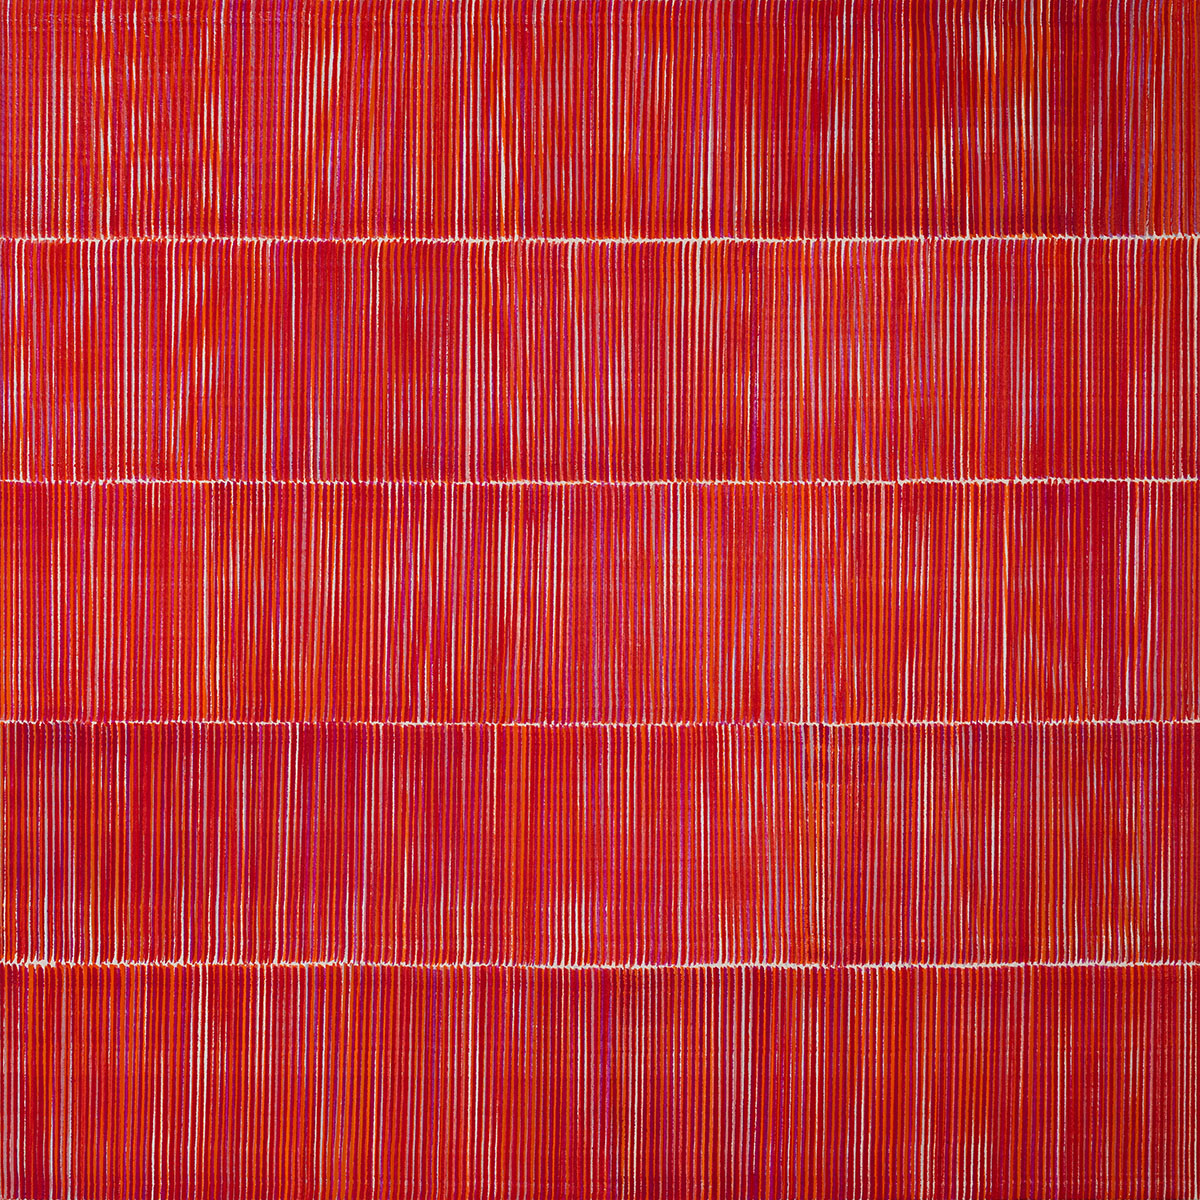 Nikola Dimitrov, RoterKlangRaum II, 2022, Pigmente, Bindemittel auf Leinwand, 100 × 100 cm